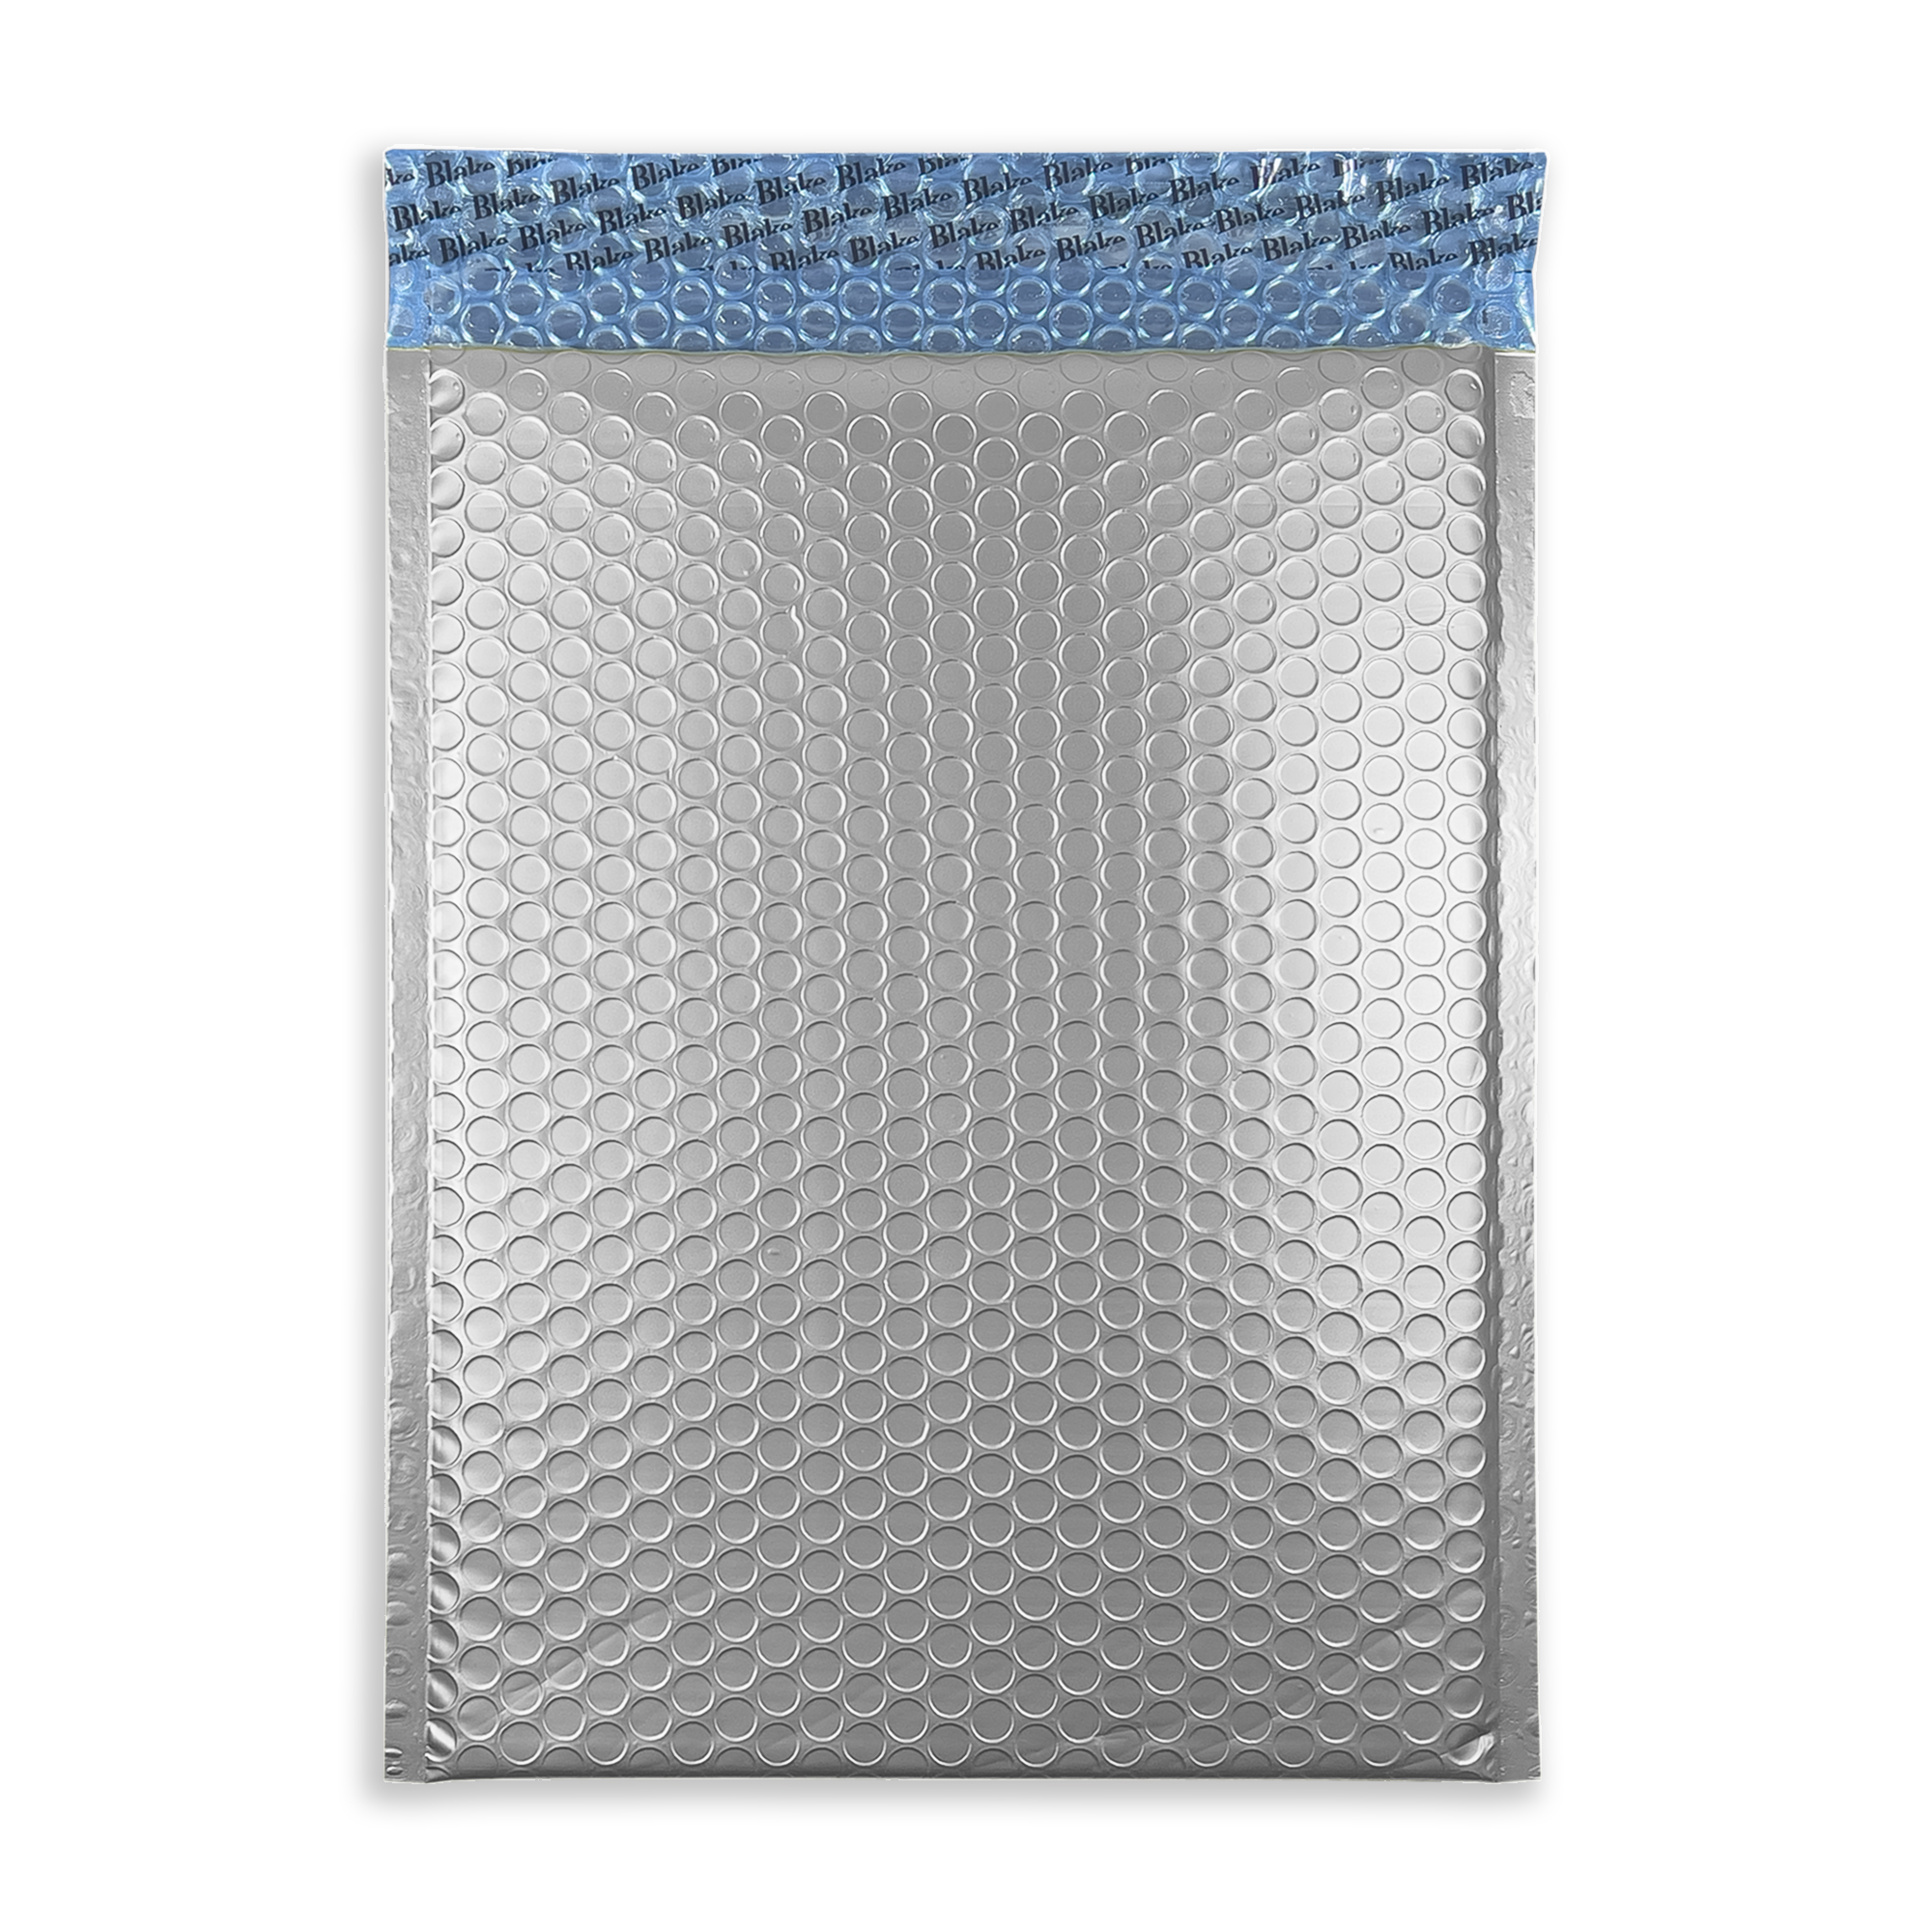 metallic-silver-bubble-padded-envelopes-matt-rectangle-flap-open